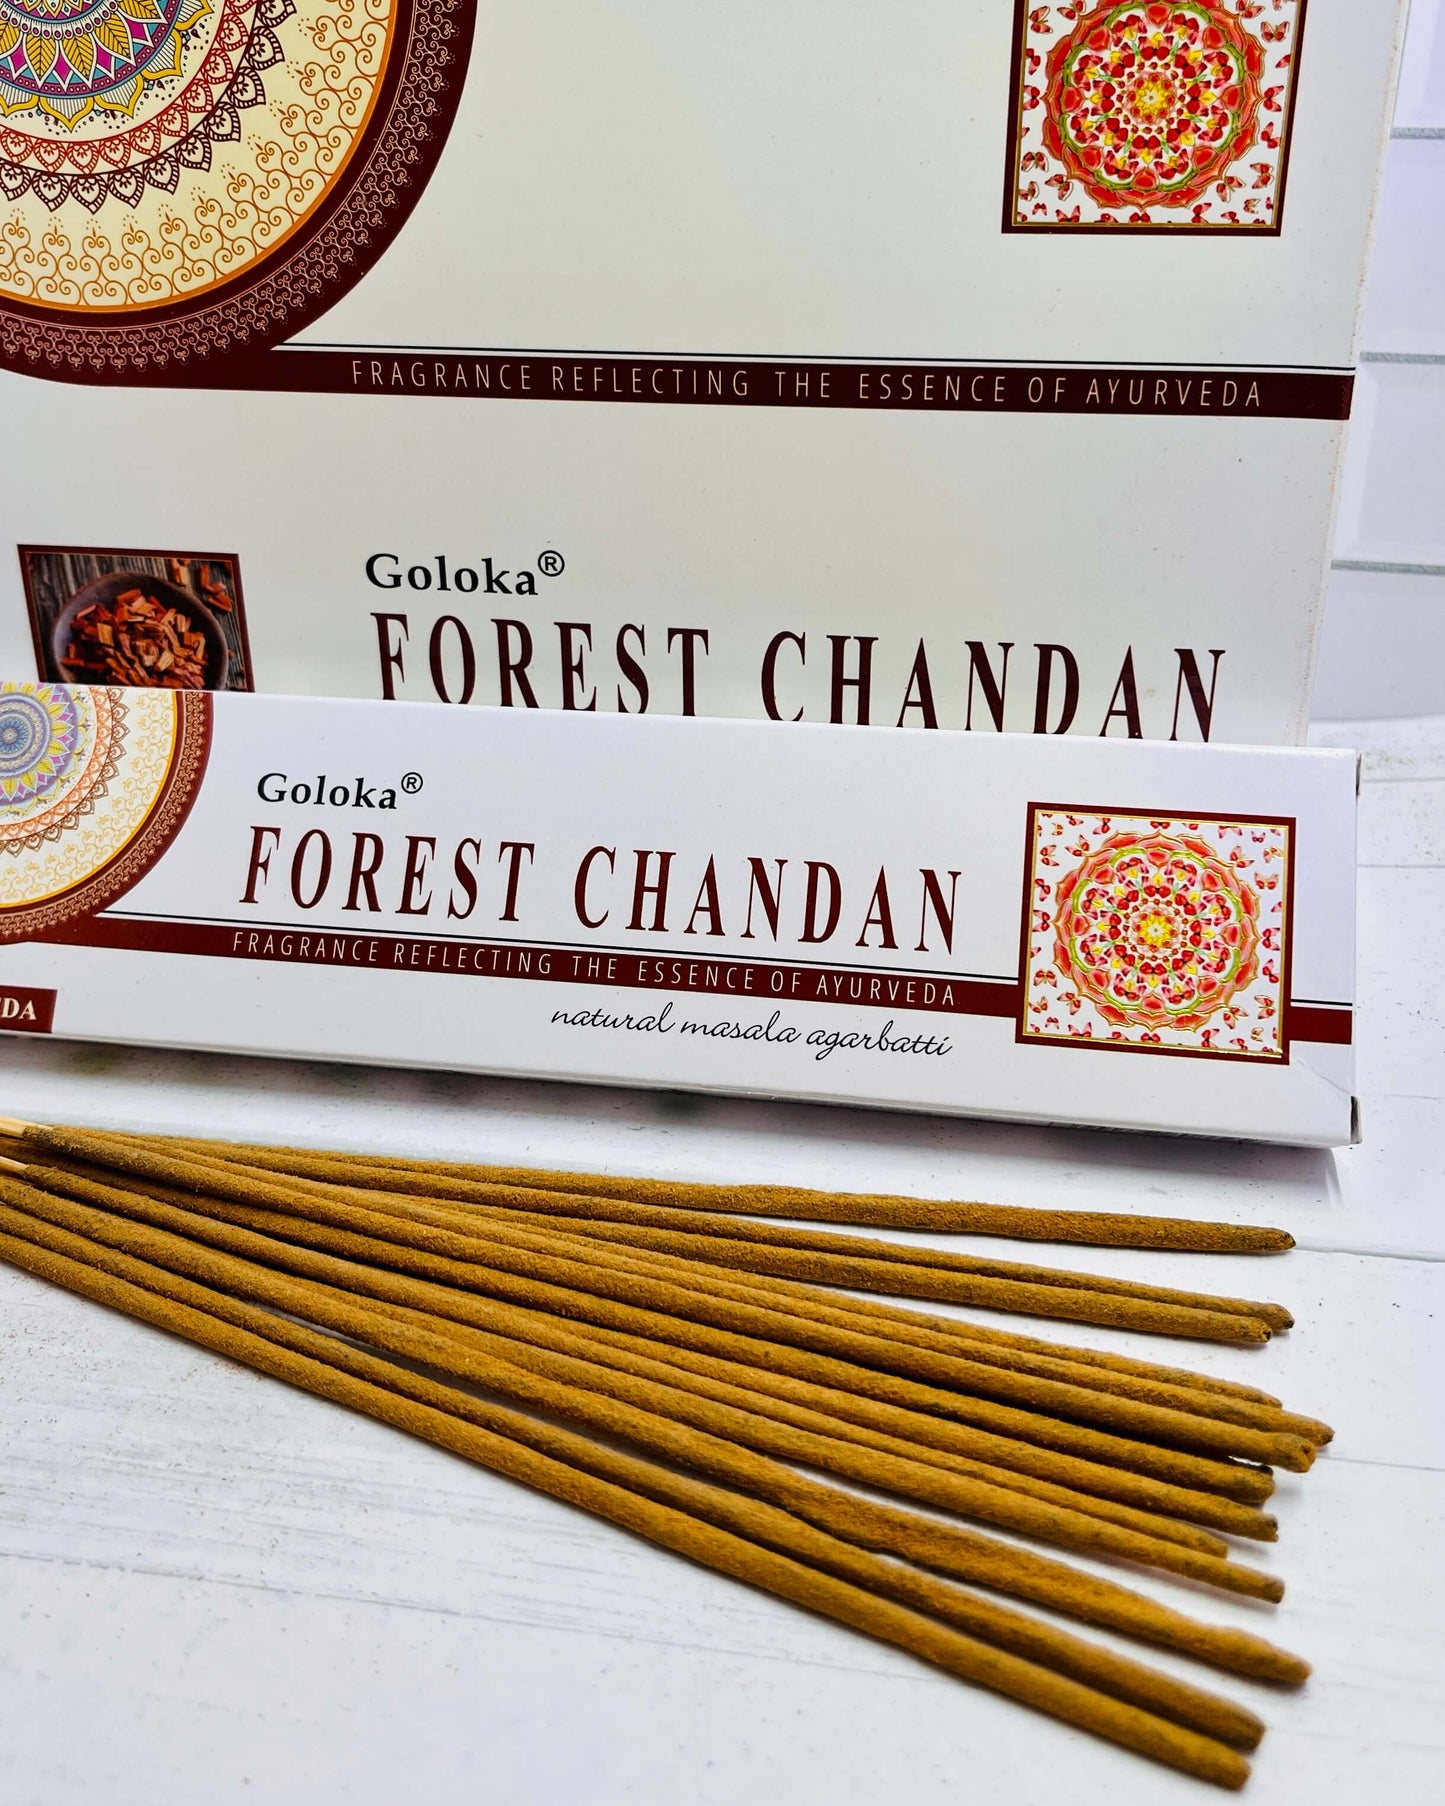 Goloka Forest Chandan incense